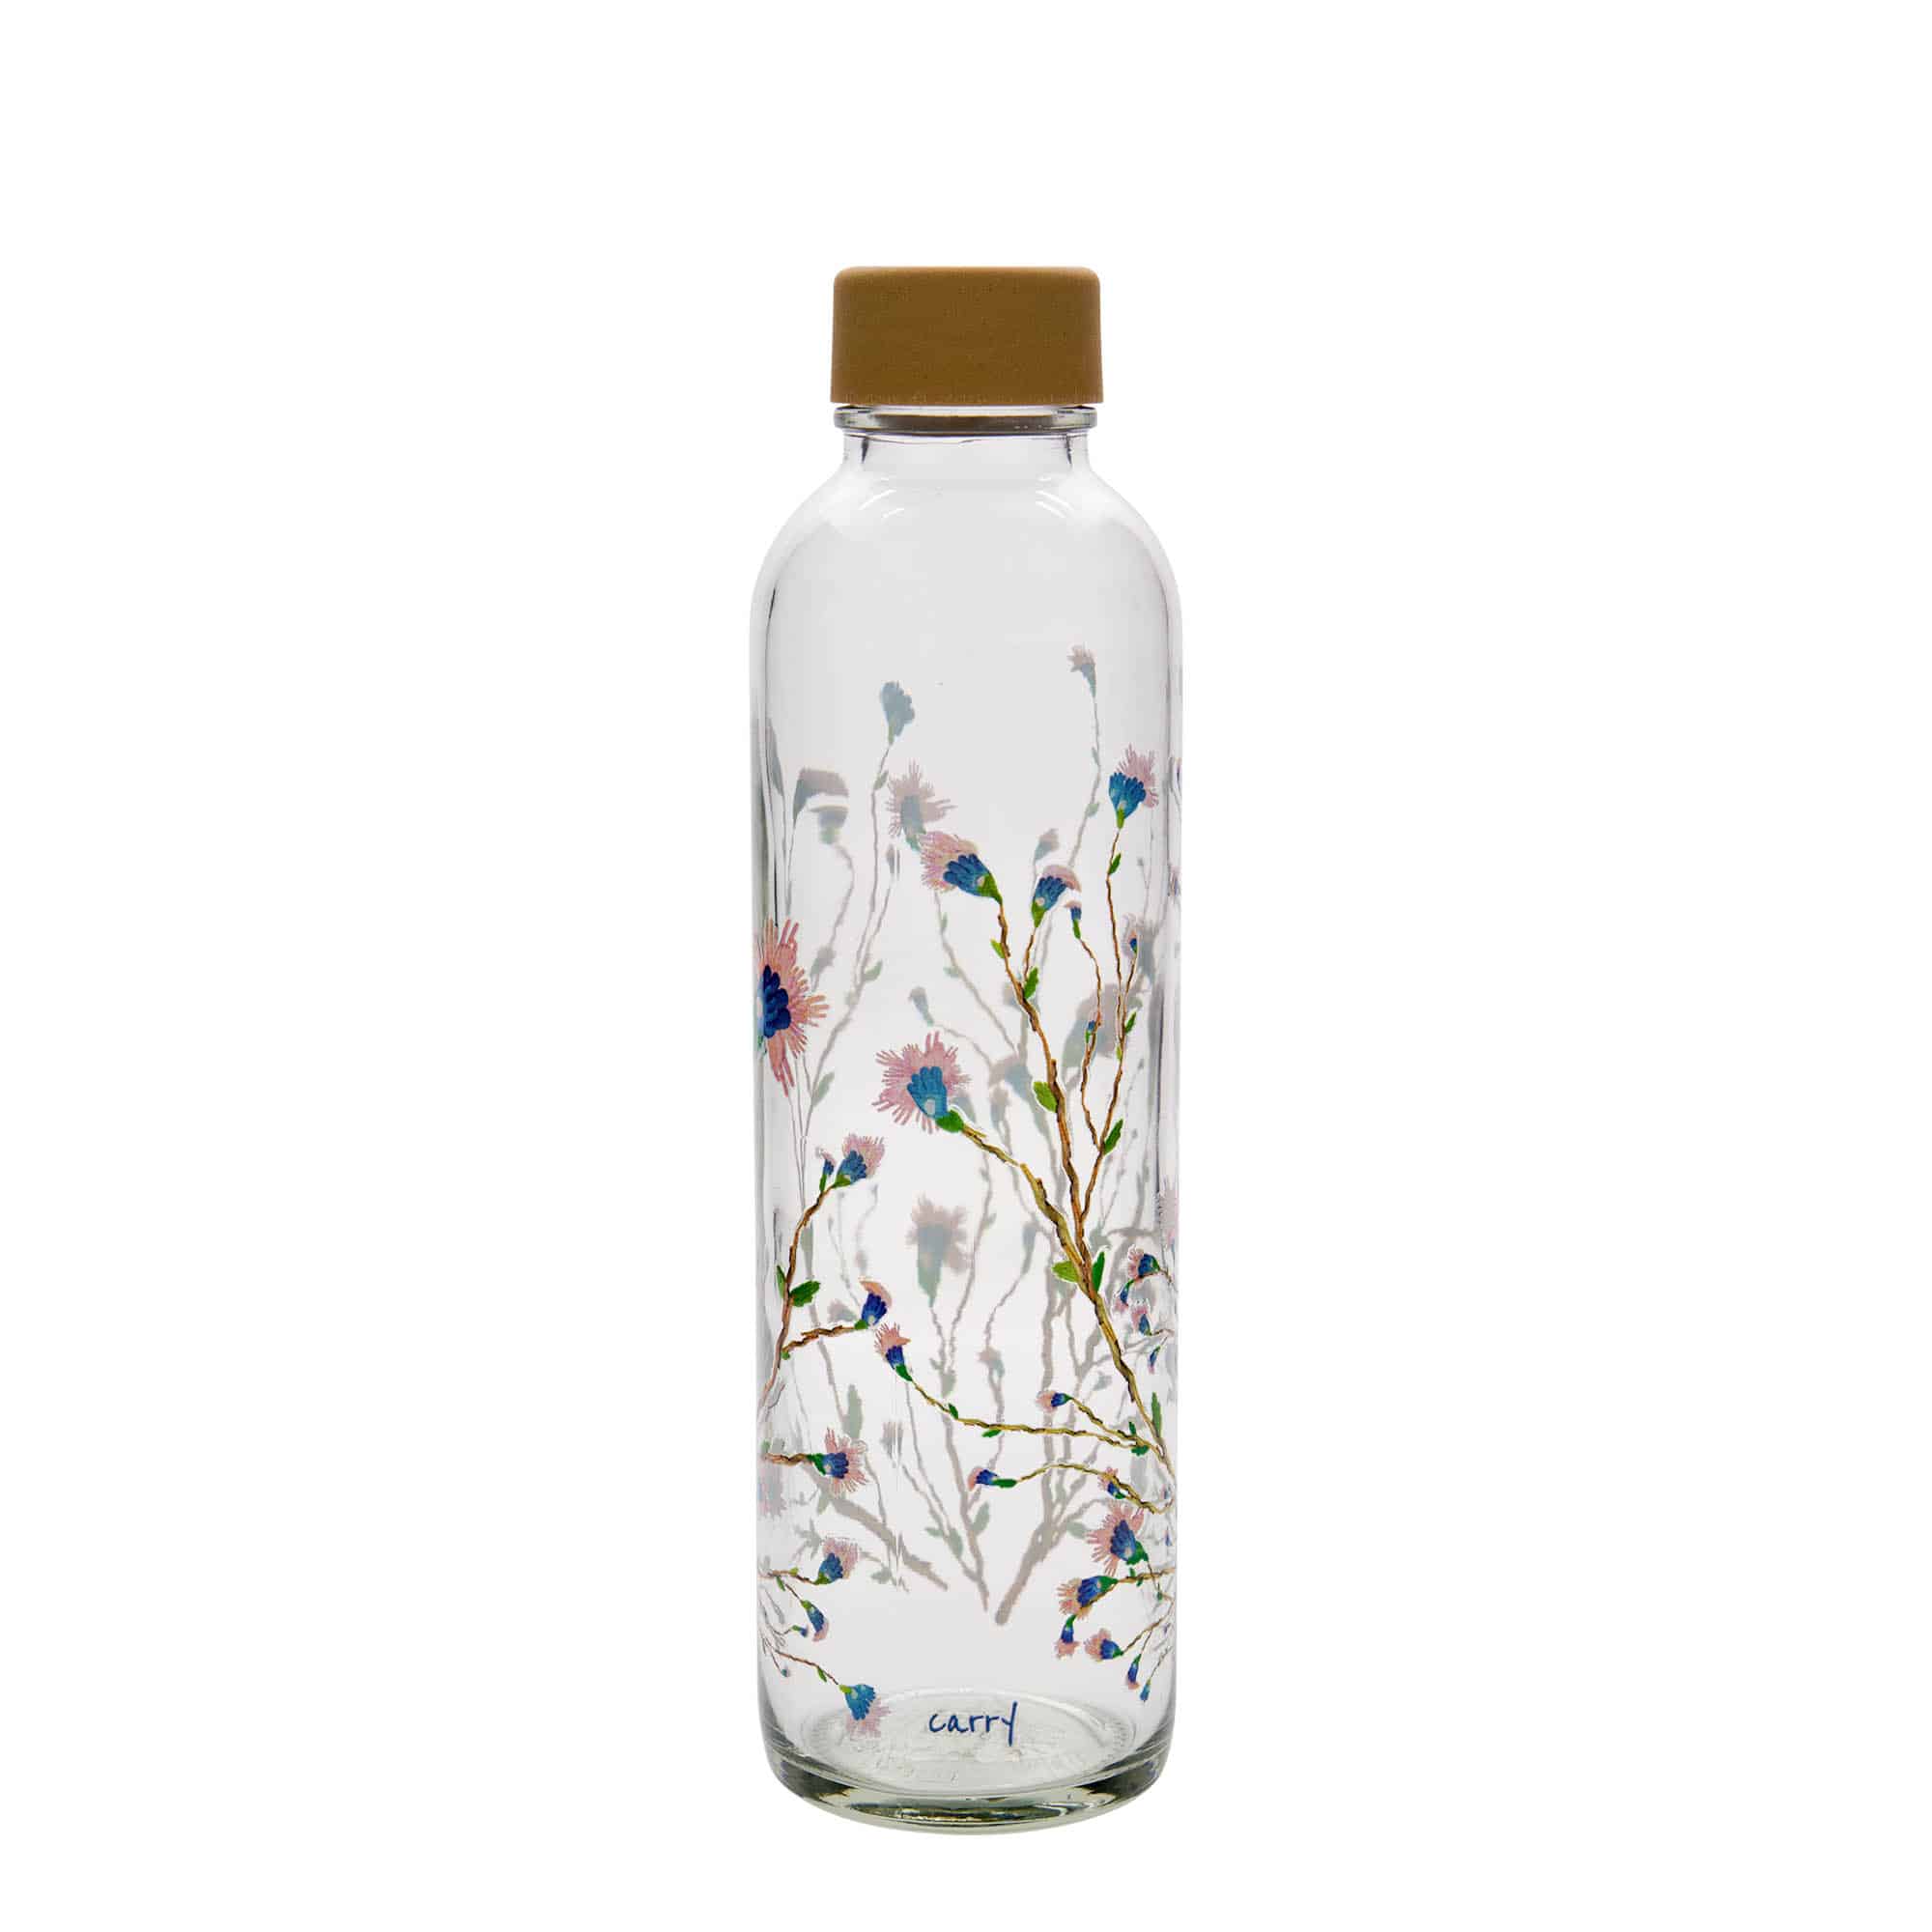 700 ml water bottle ‘CARRY Bottle’, print: Hanami, closure: screw cap